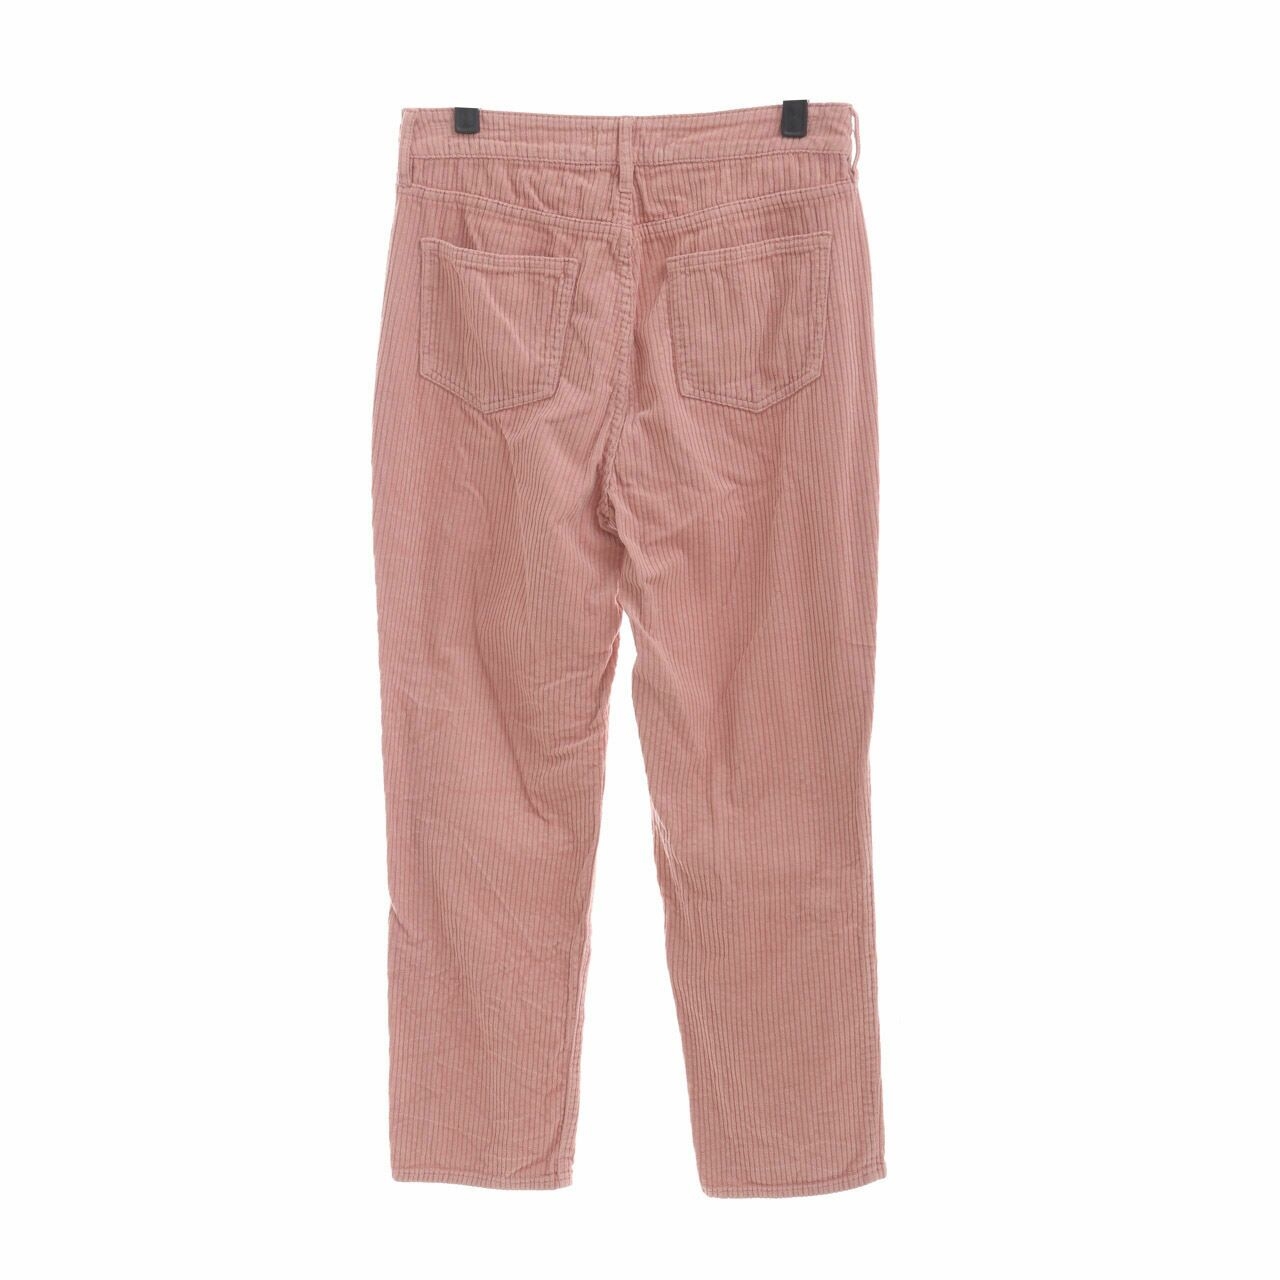 Pacsun Dusty Pink Corduroy Long Pants